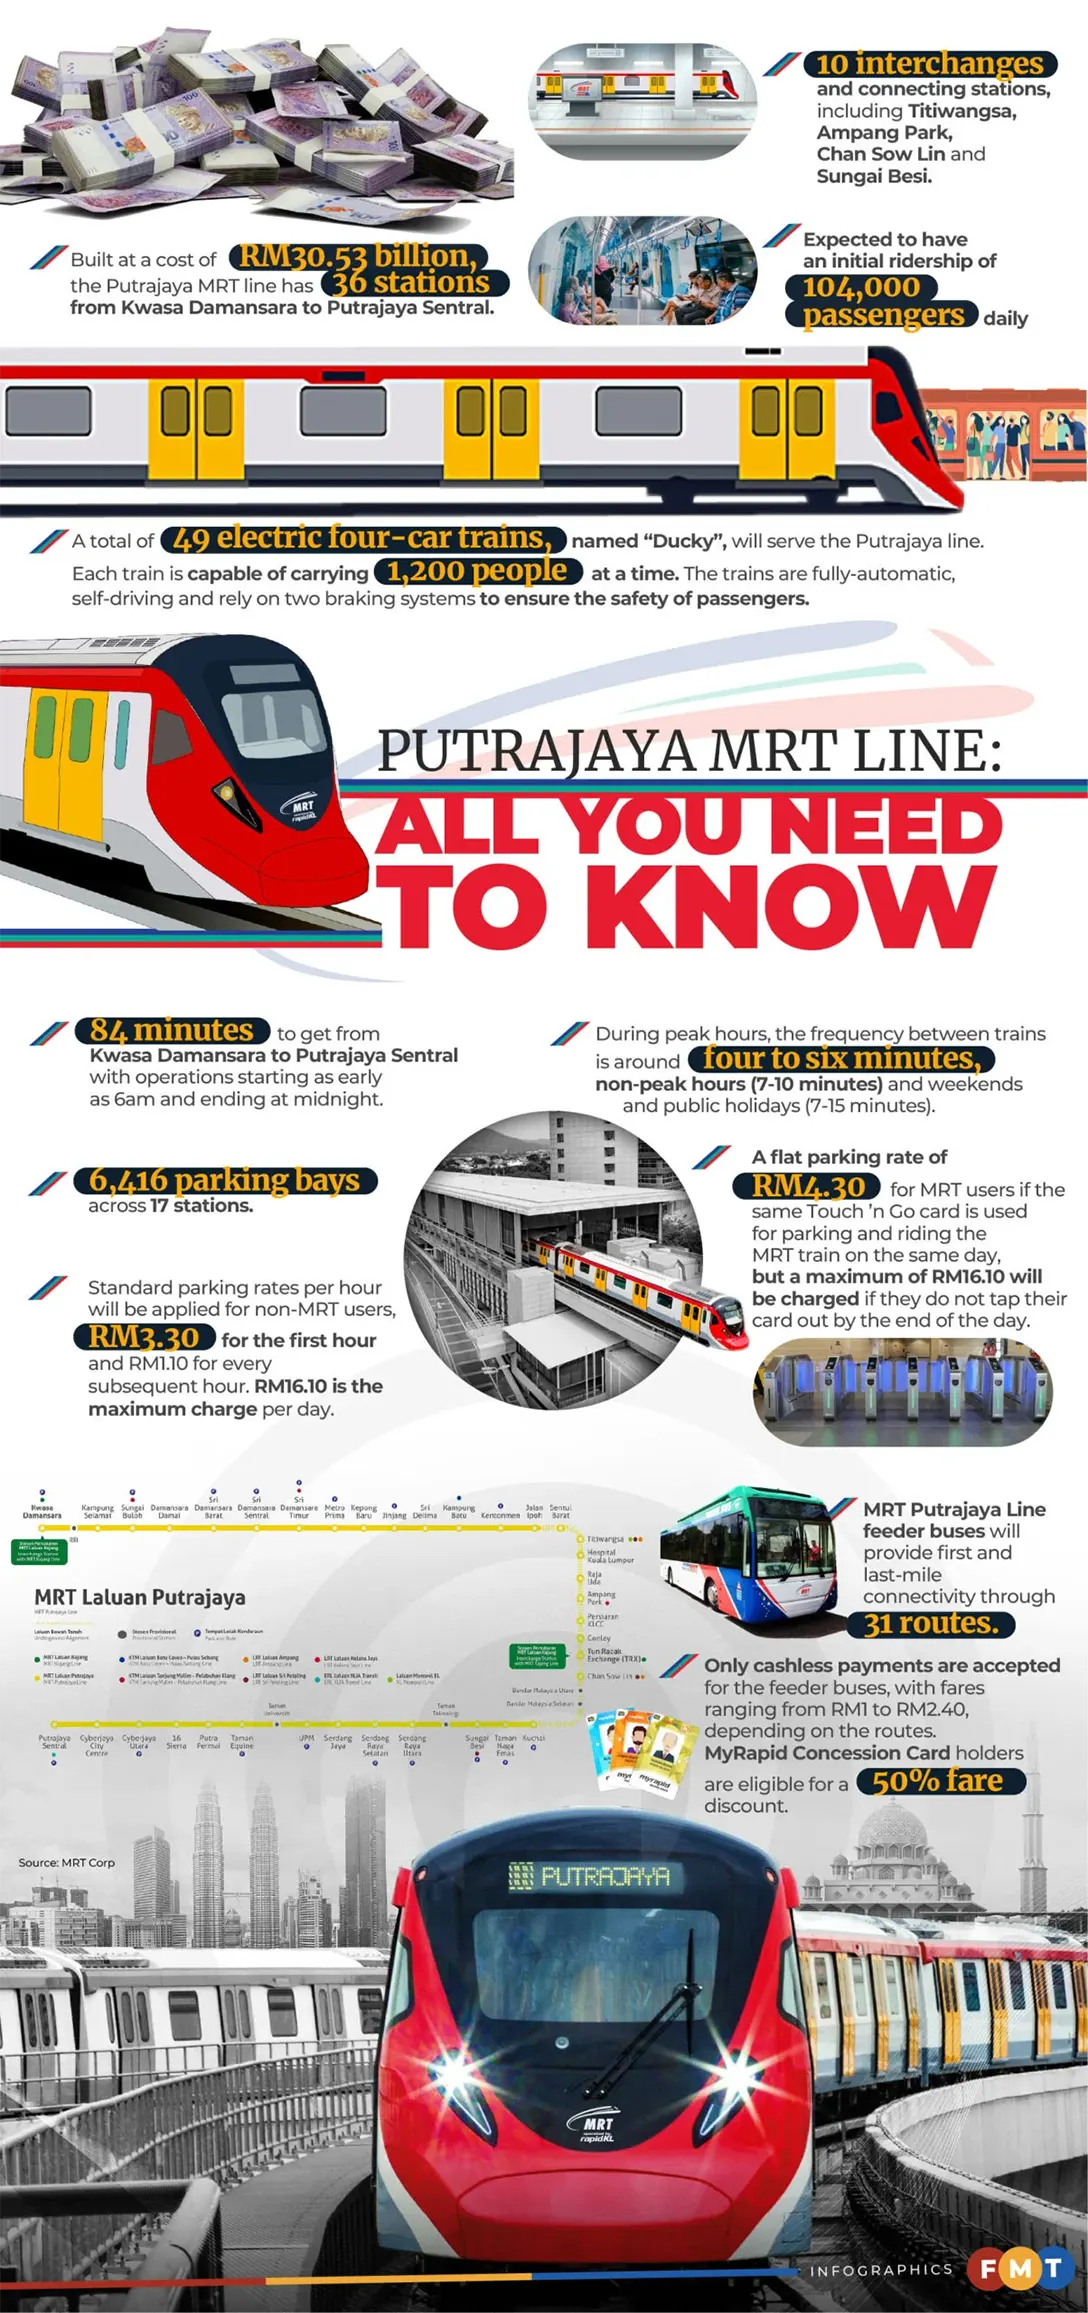 Putrajaya MRT line: All you need to know